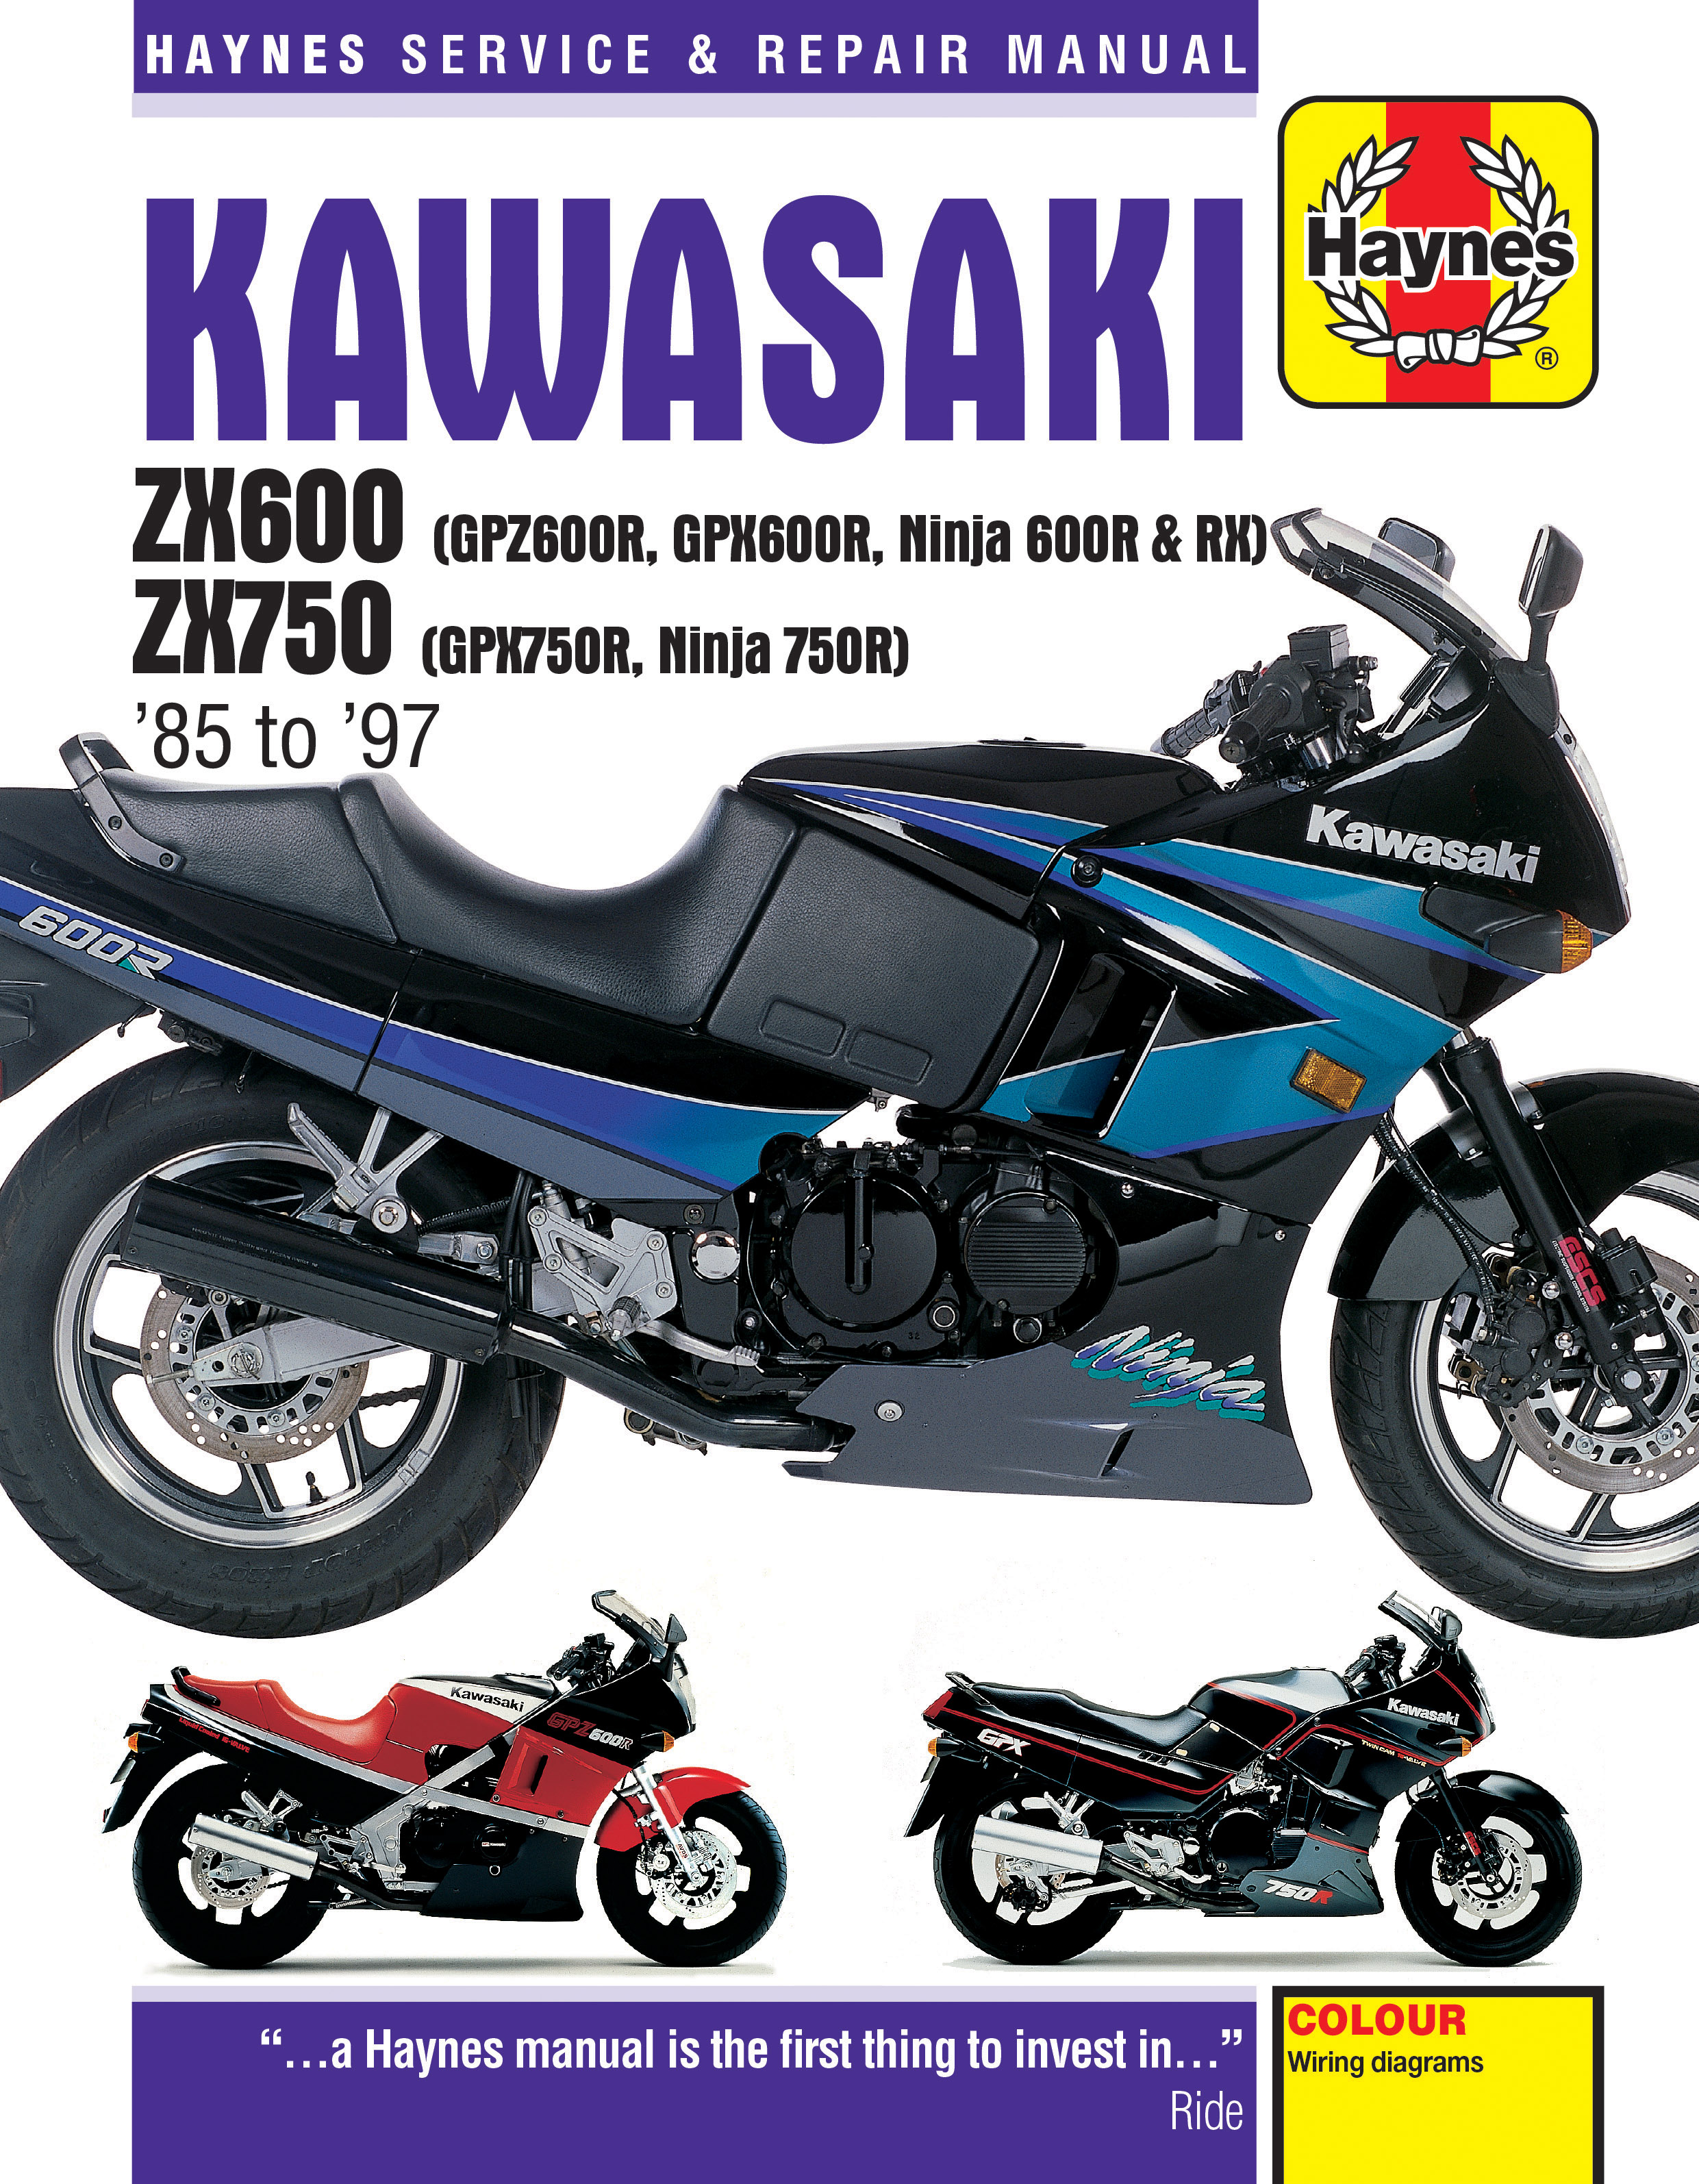 Genuine Kawasaki GPX600 GPZ600R Front Wheel Bearings 1988-1996 